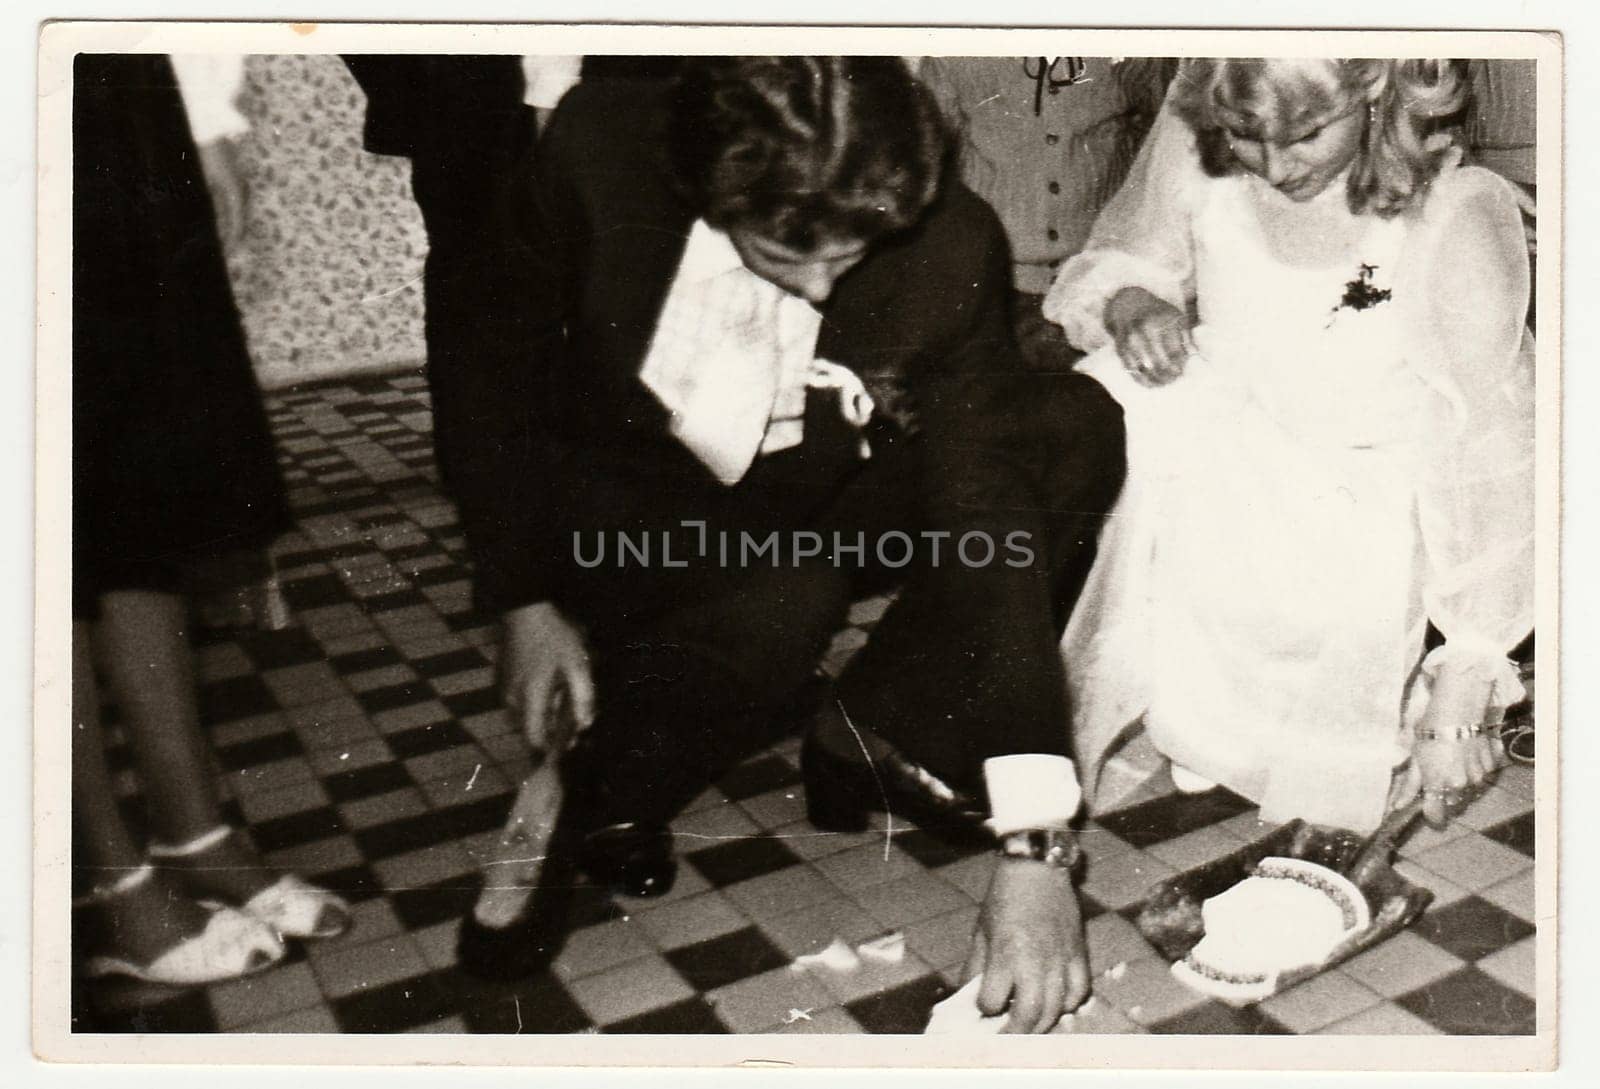 THE CZECHOSLOVAK SOCIALIST REPUBLIC - CIRCA 1970s: Retro photo shows people on wedding celebration. Black and white vintage photography.